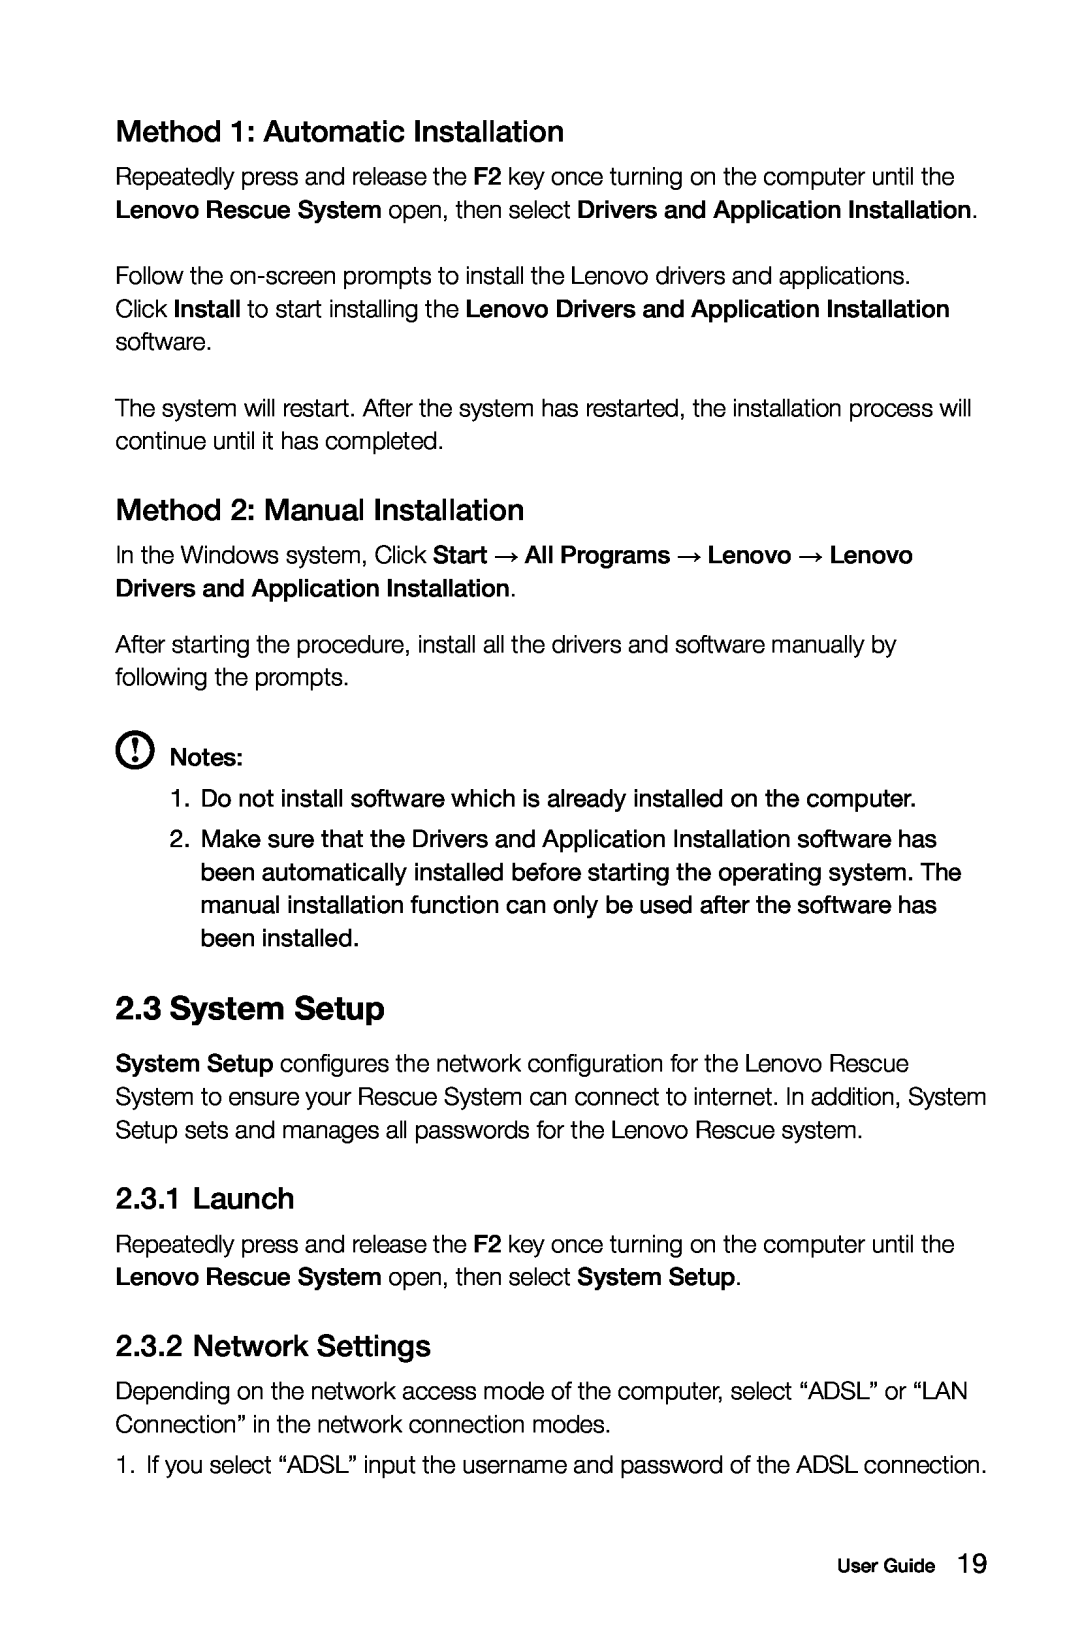 Lenovo 10073/1169 System Setup, Method 1 Automatic Installation, Method 2 Manual Installation, Launch, Network Settings 